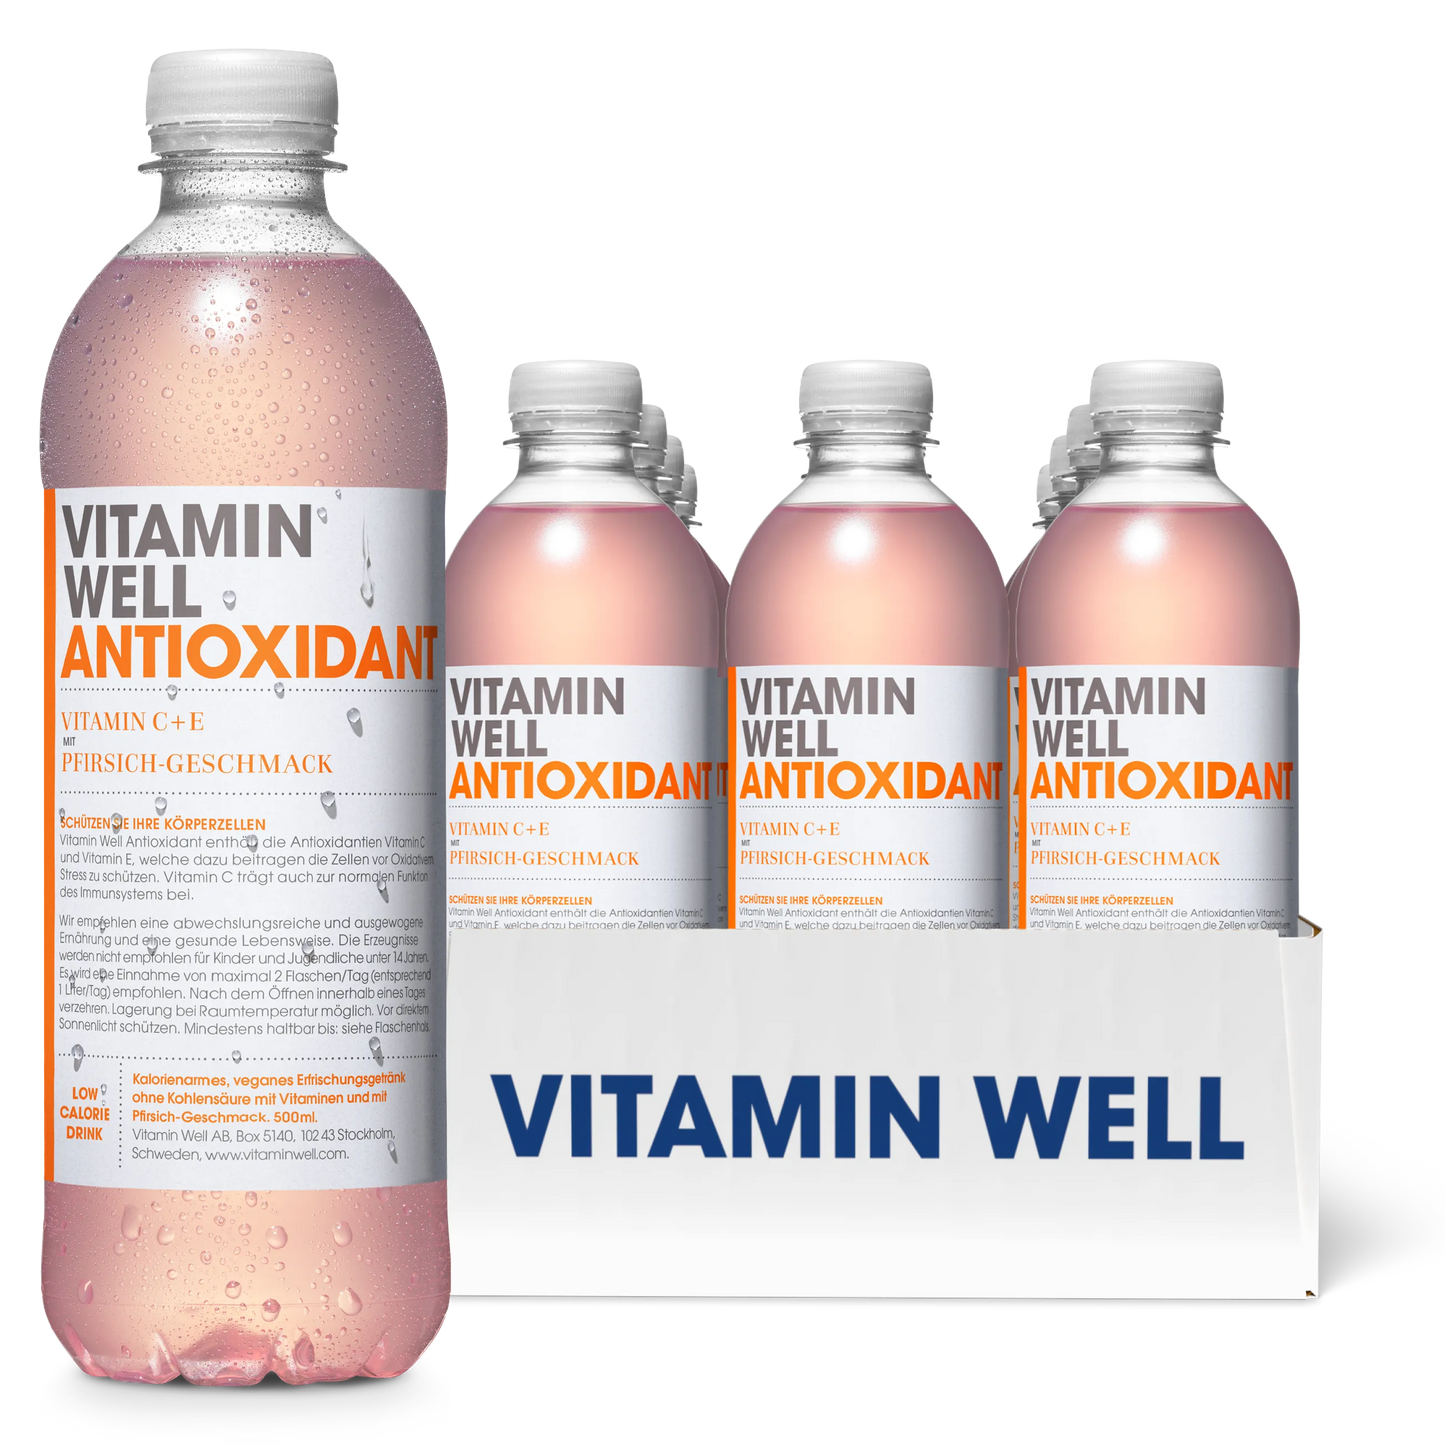 VITAMIN WELL Antioxidant 500ml x 12